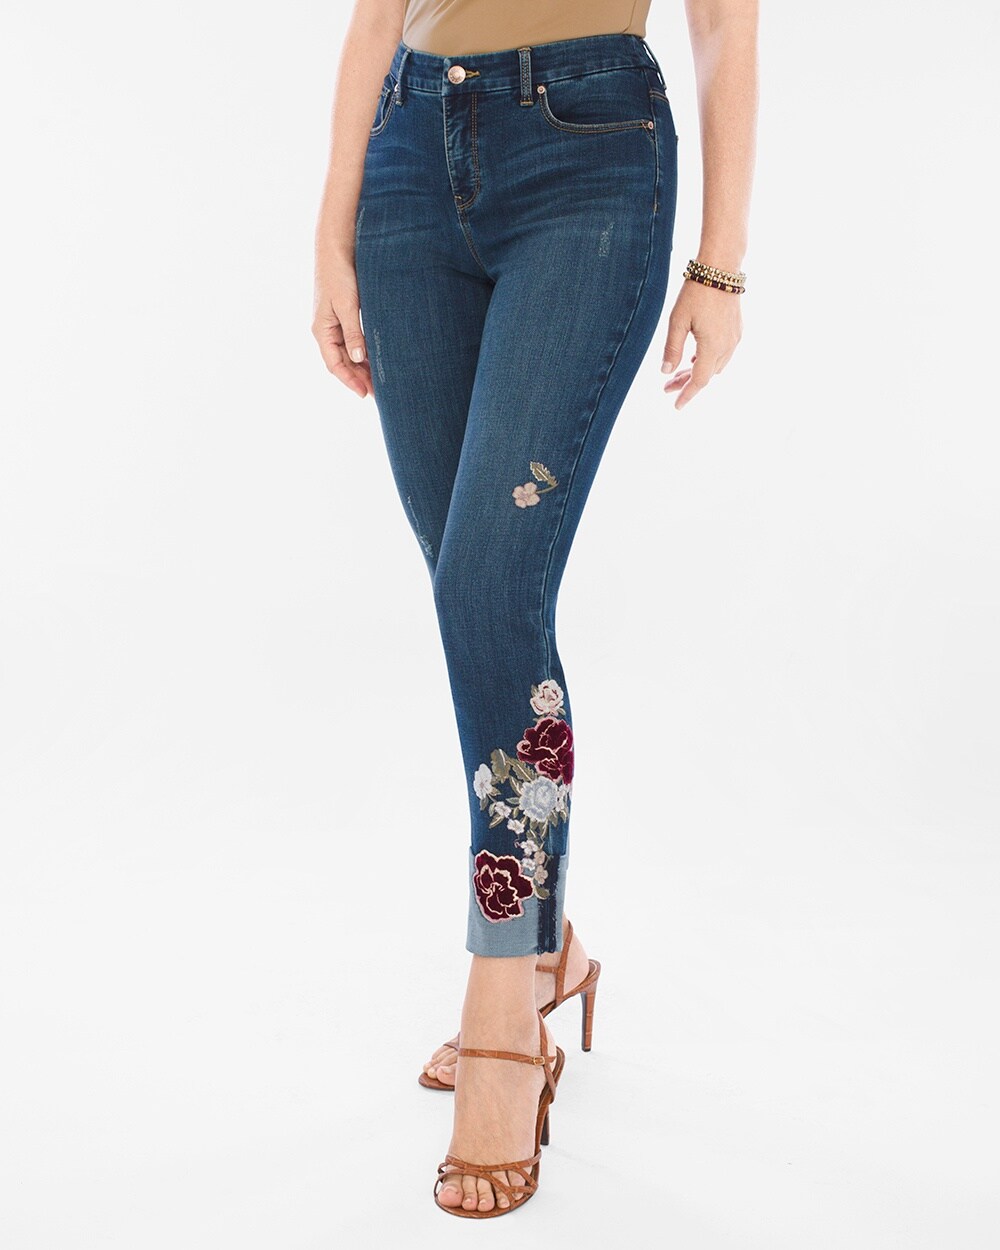 So Slimming Velveteen Floral Girlfriend Ankle Jeans